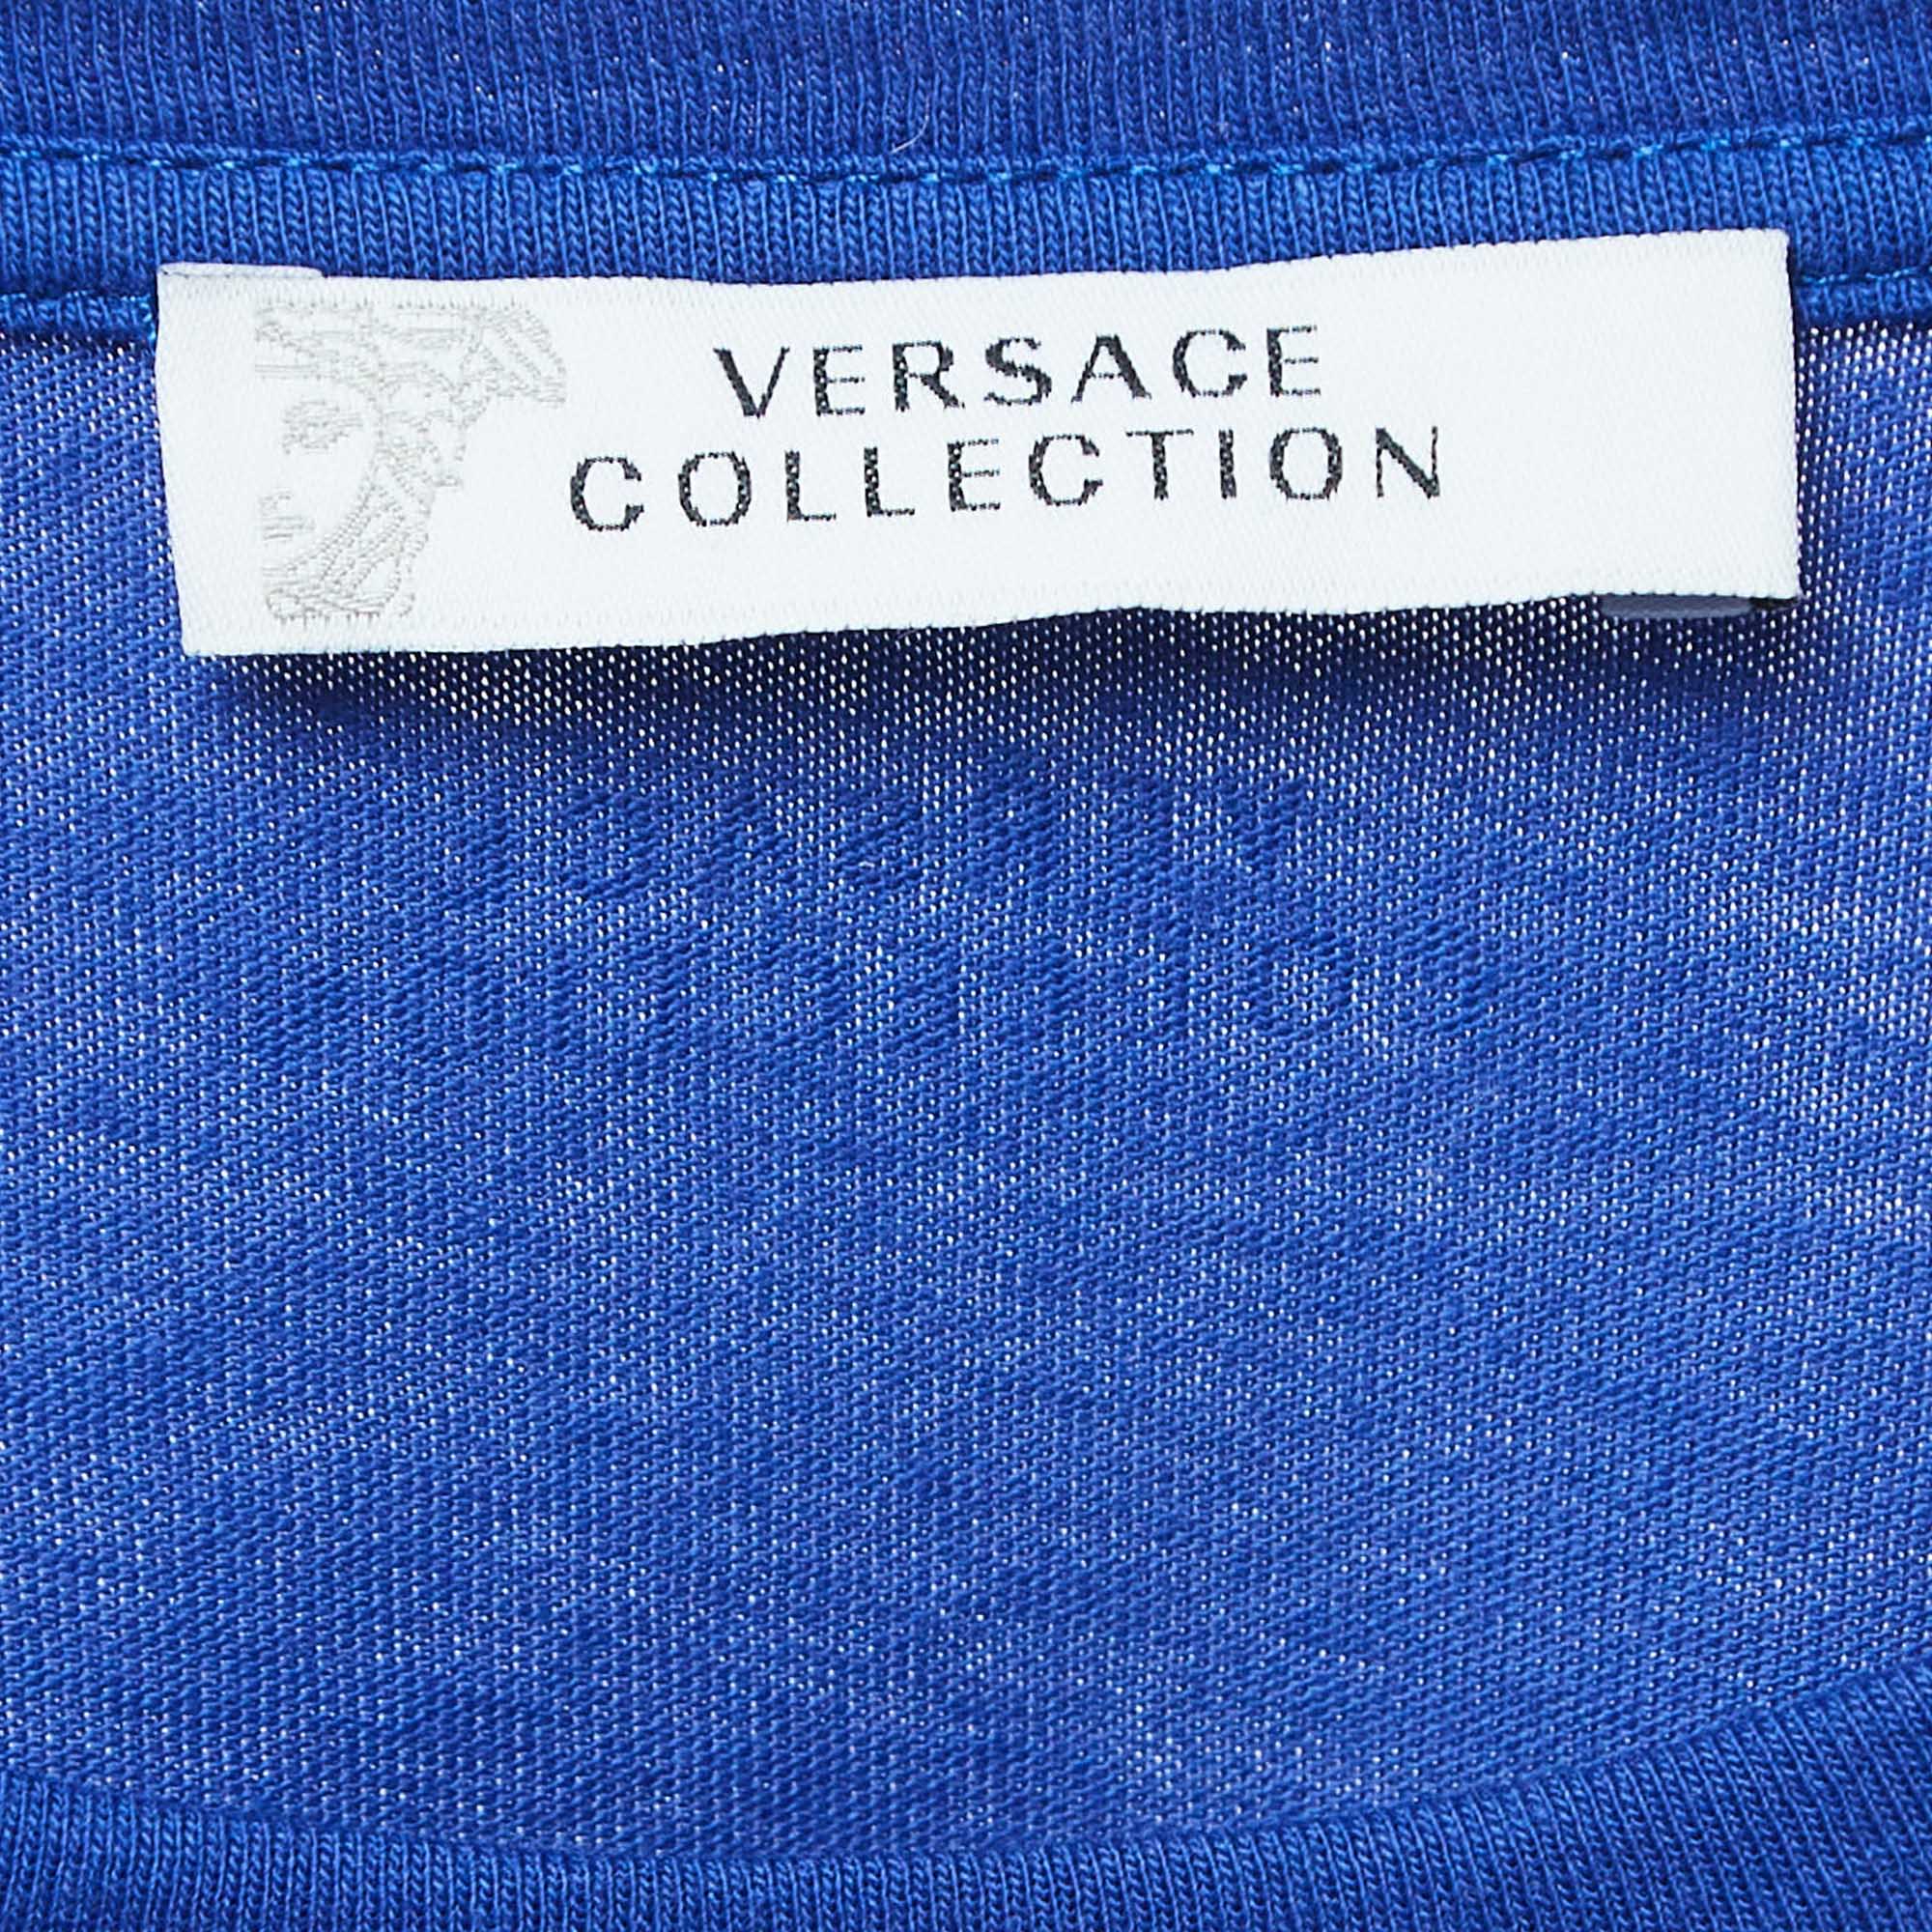 Versace Collection Blue Printed Cotton T-Shirt L